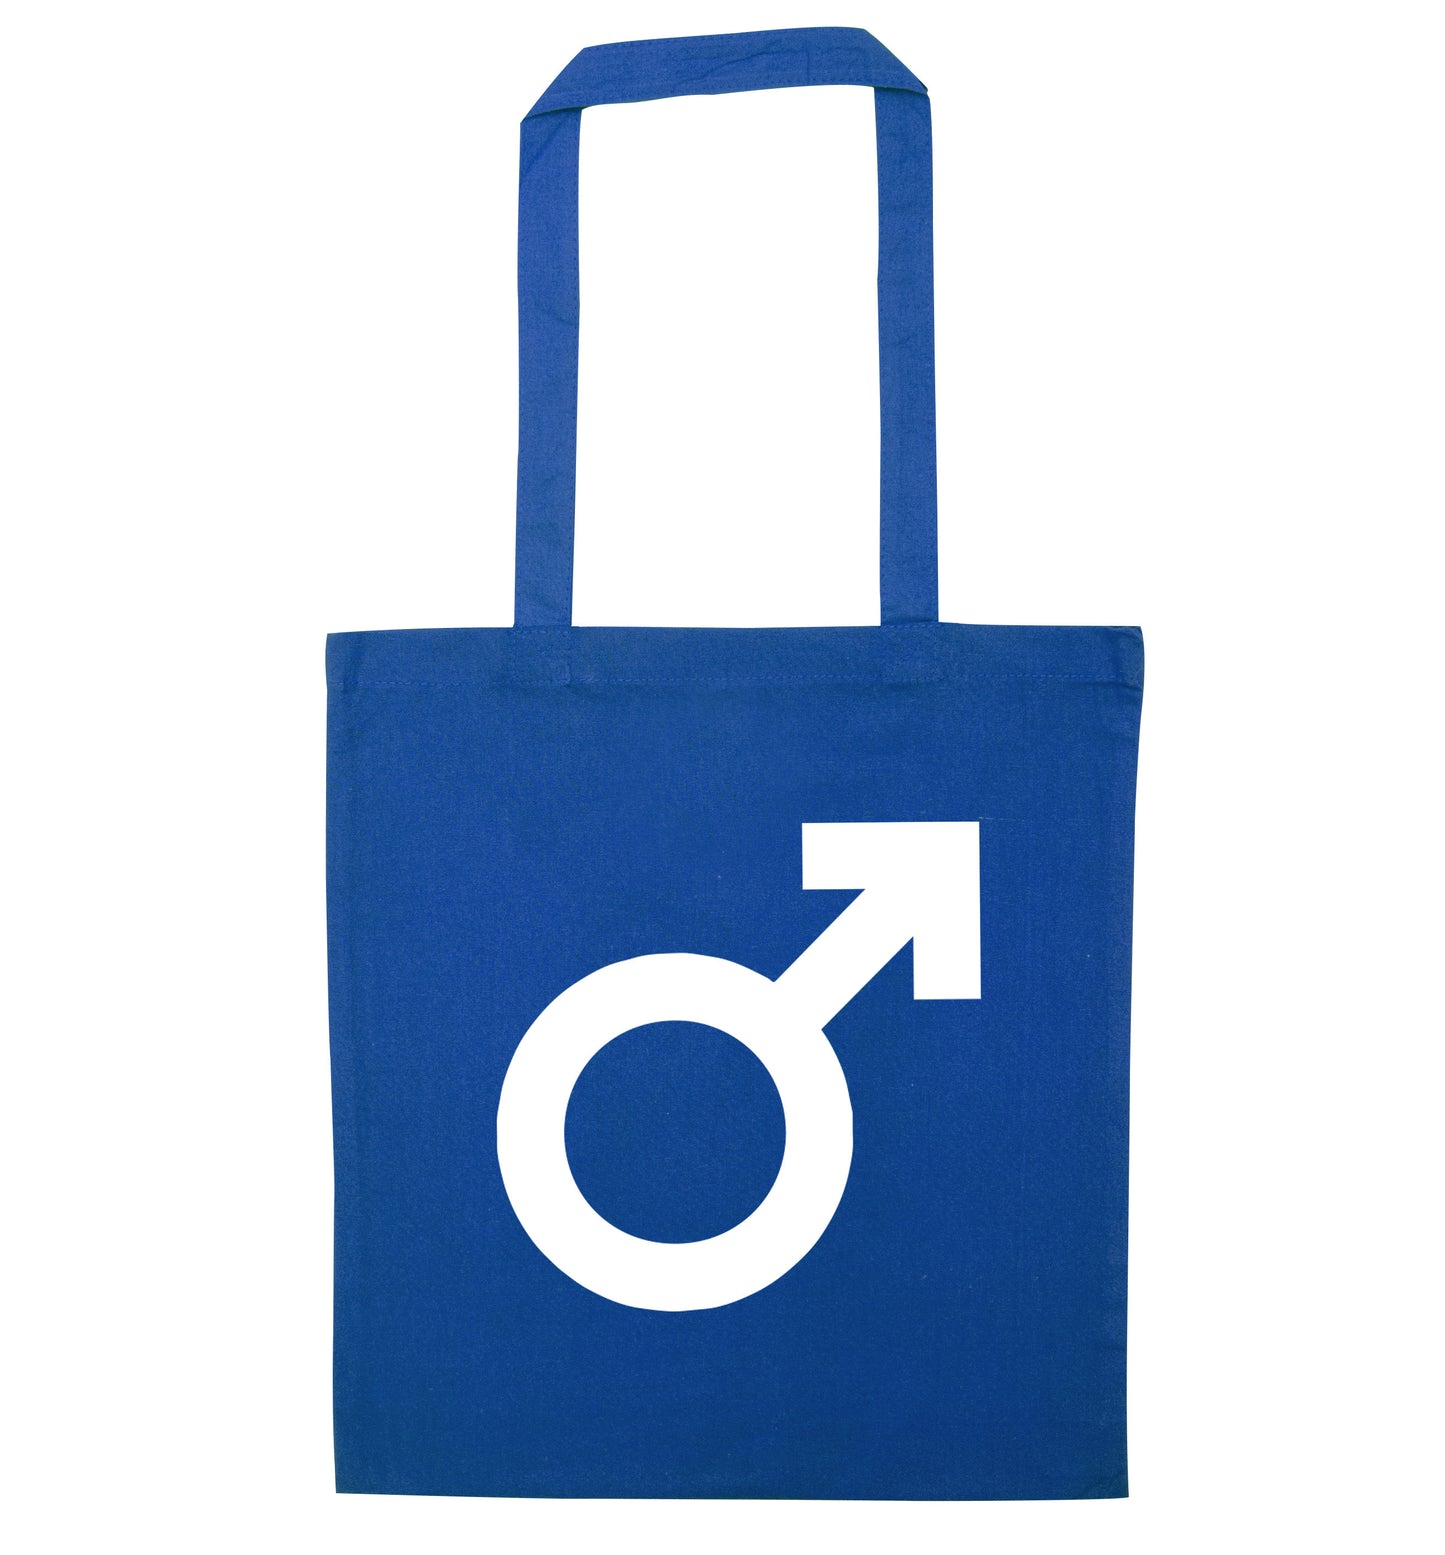 Male symbol large blue tote bag